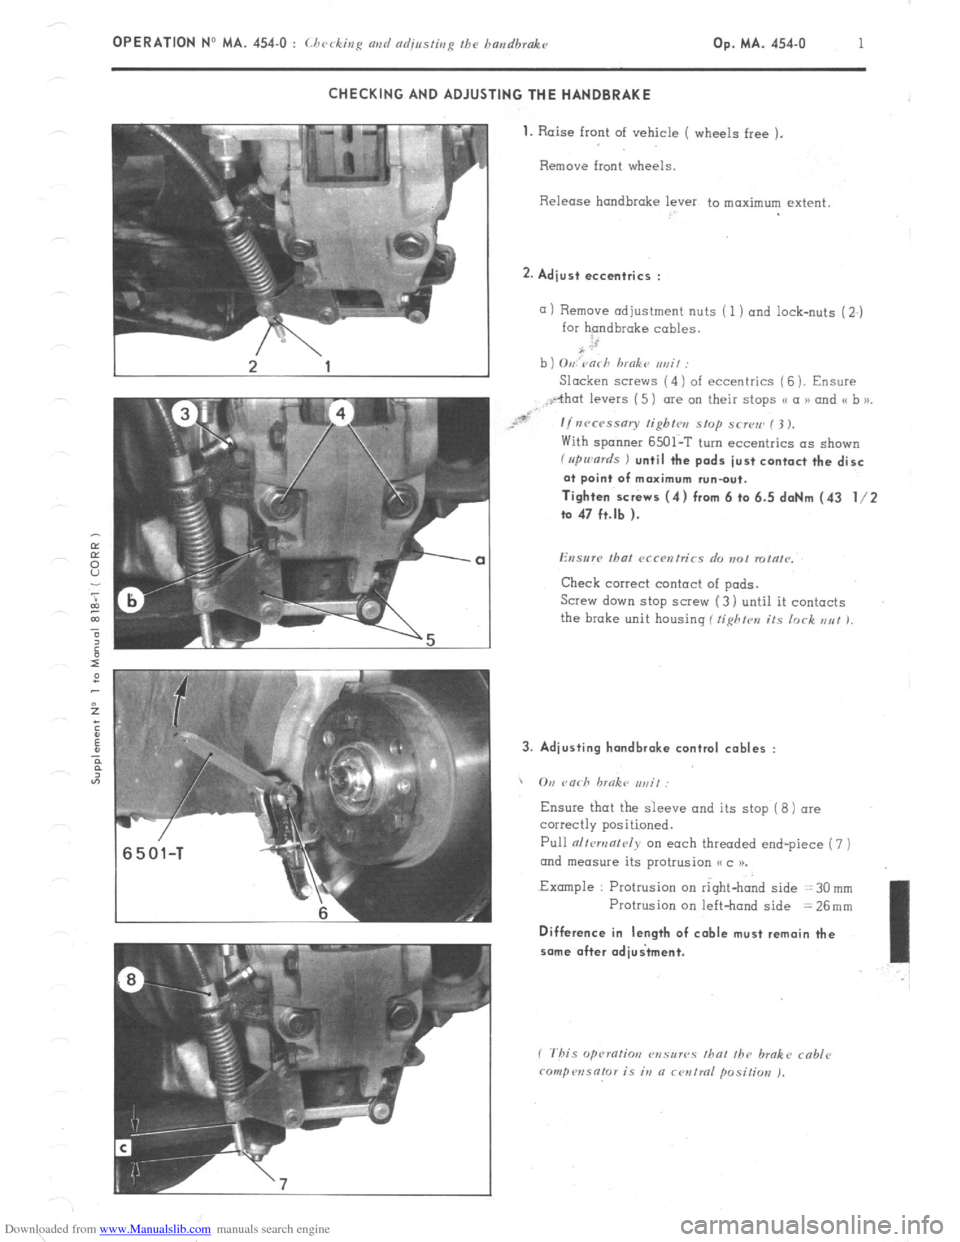 Citroen CX 1982 1.G Workshop Manual Downloaded from www.Manualslib.com manuals search engine OPERATION No MA. 454-O : Lhcckiu~ avd adjnsfbrR fhe bandbrake op. MA. 454-u I CHECKING AND ADJUSTING THE HANDBRAKE 
1. 
Raise front of vehicle 